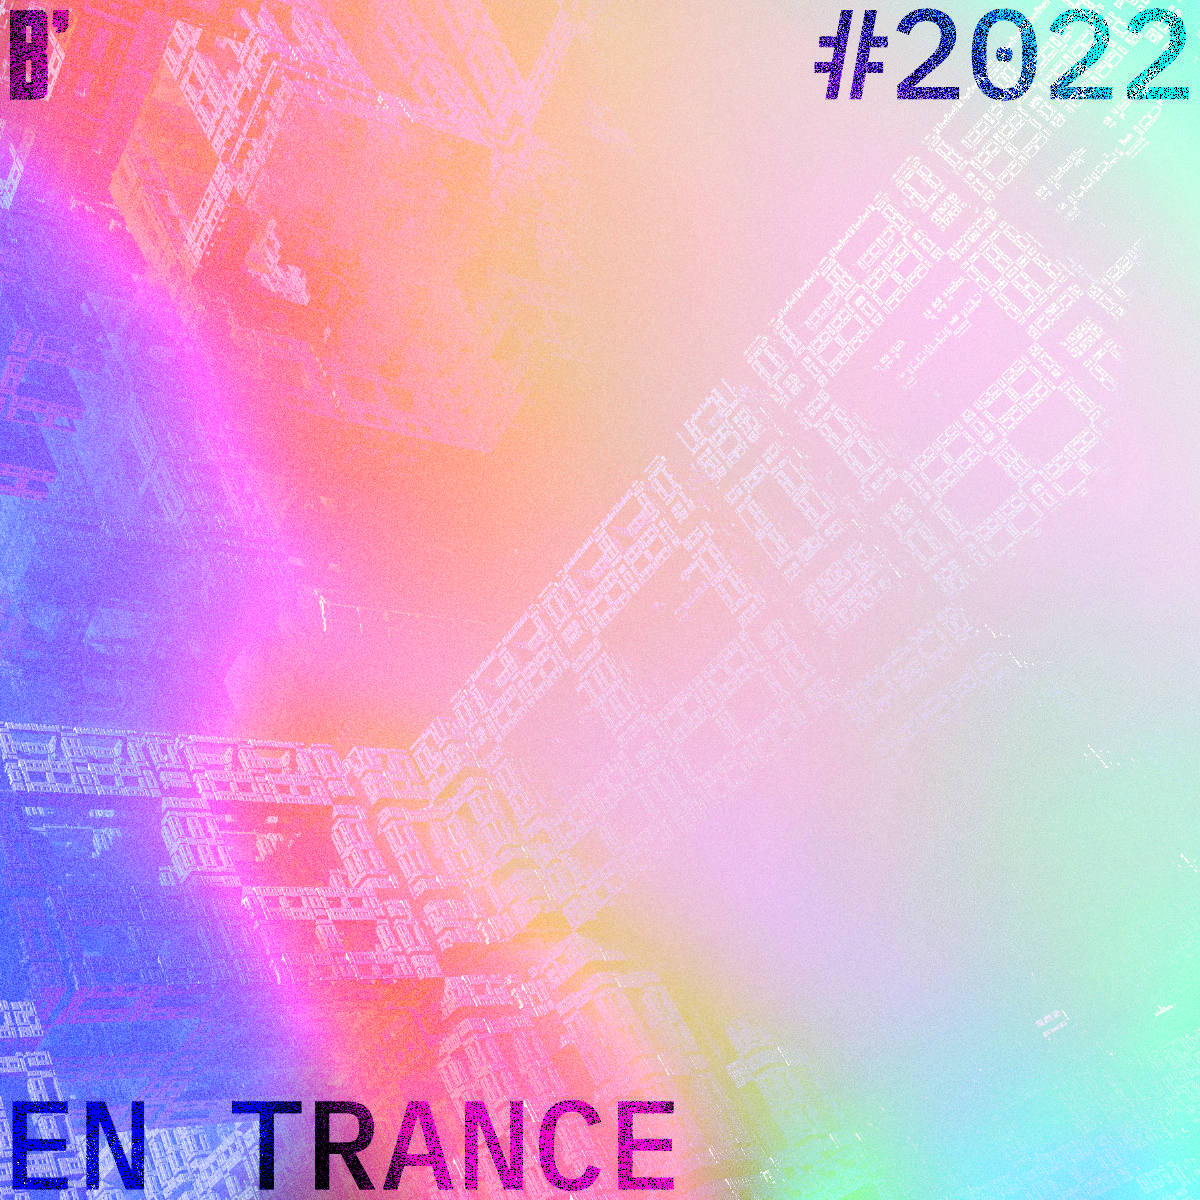 B’s en“trance“ extended dance mix